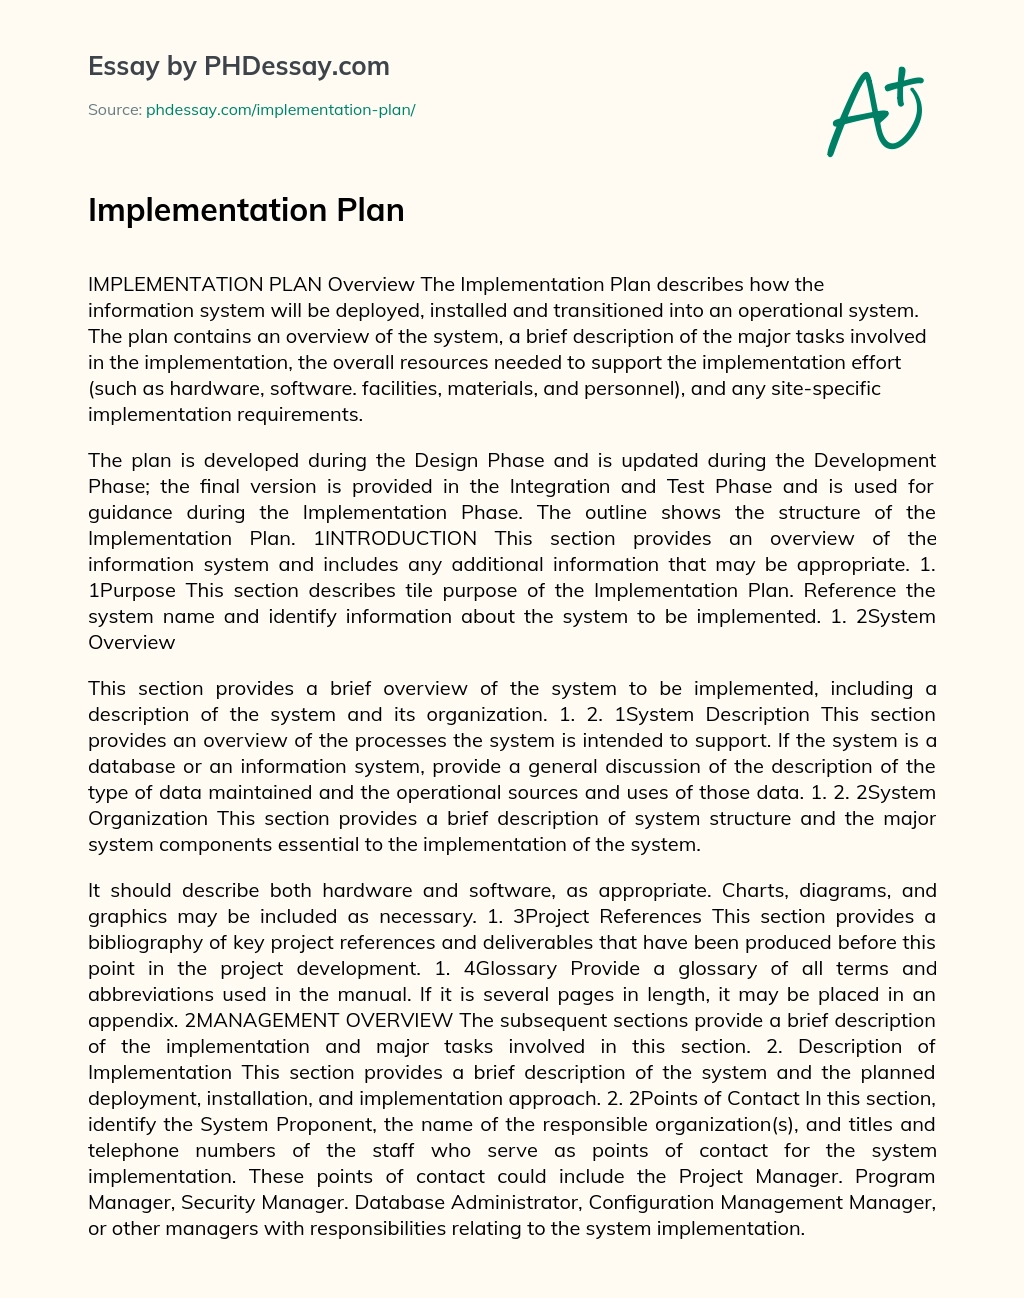 Implementation Plan essay